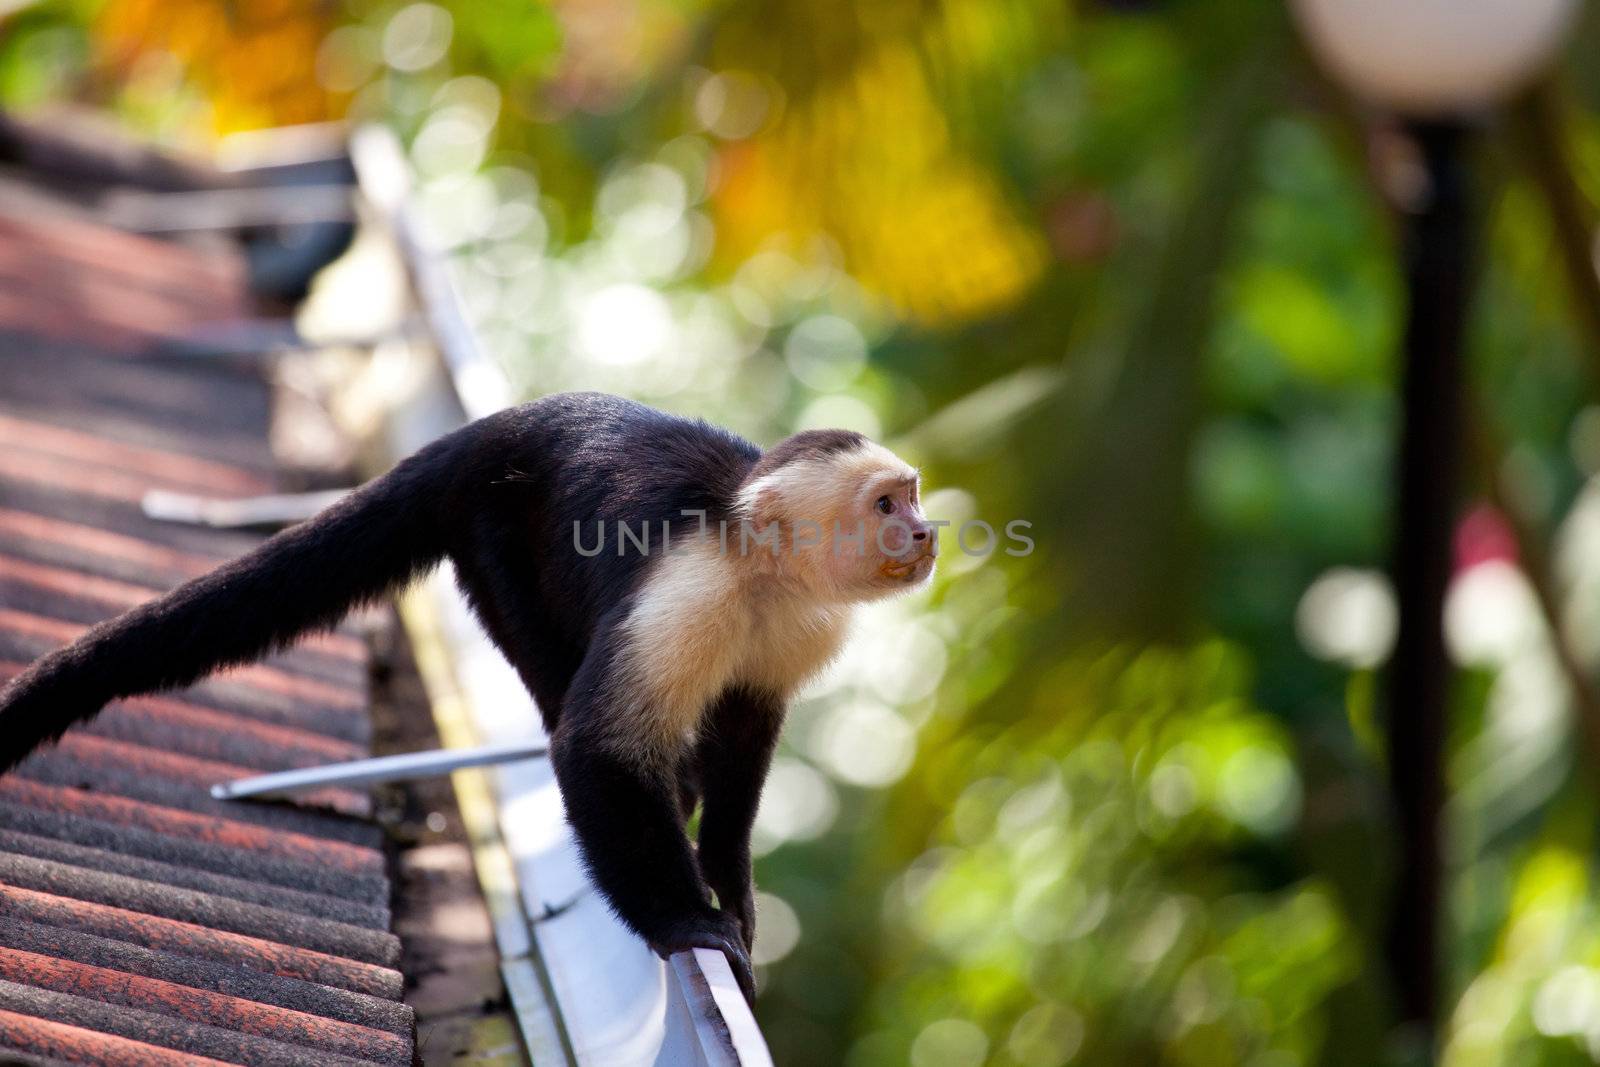 White faced capuchin monkey by Fotosmurf